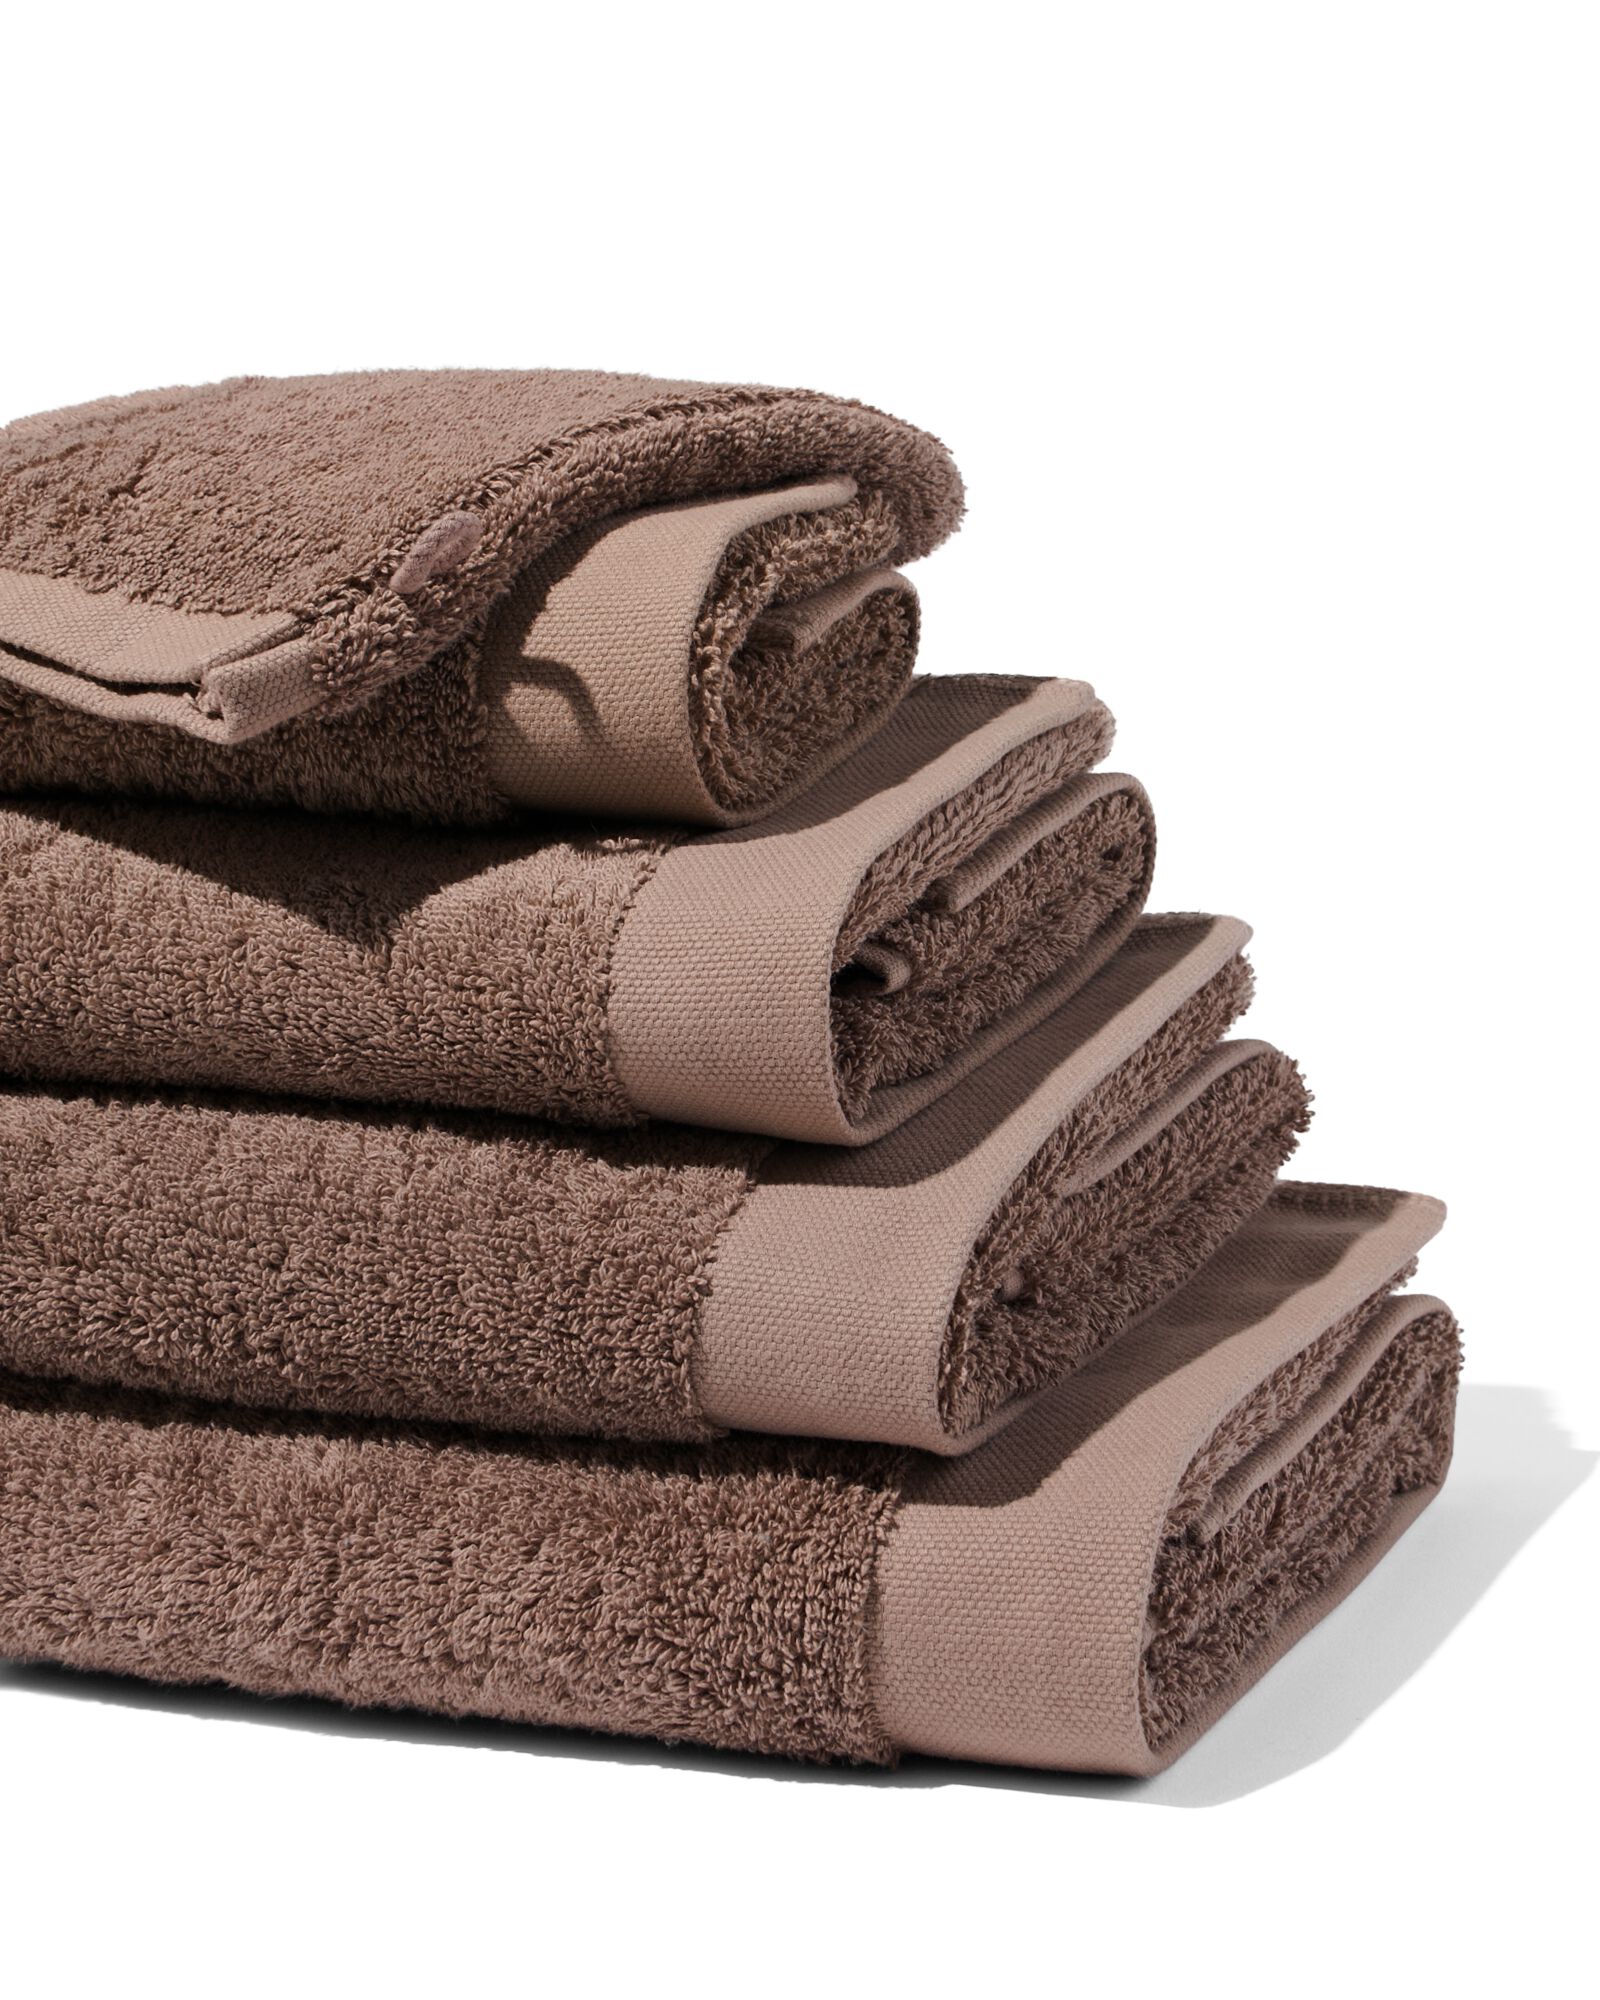 handdoek 60x110 hotelkwaliteit extra zacht taupe taupe handdoek 60 x 110 - 5230031 - HEMA